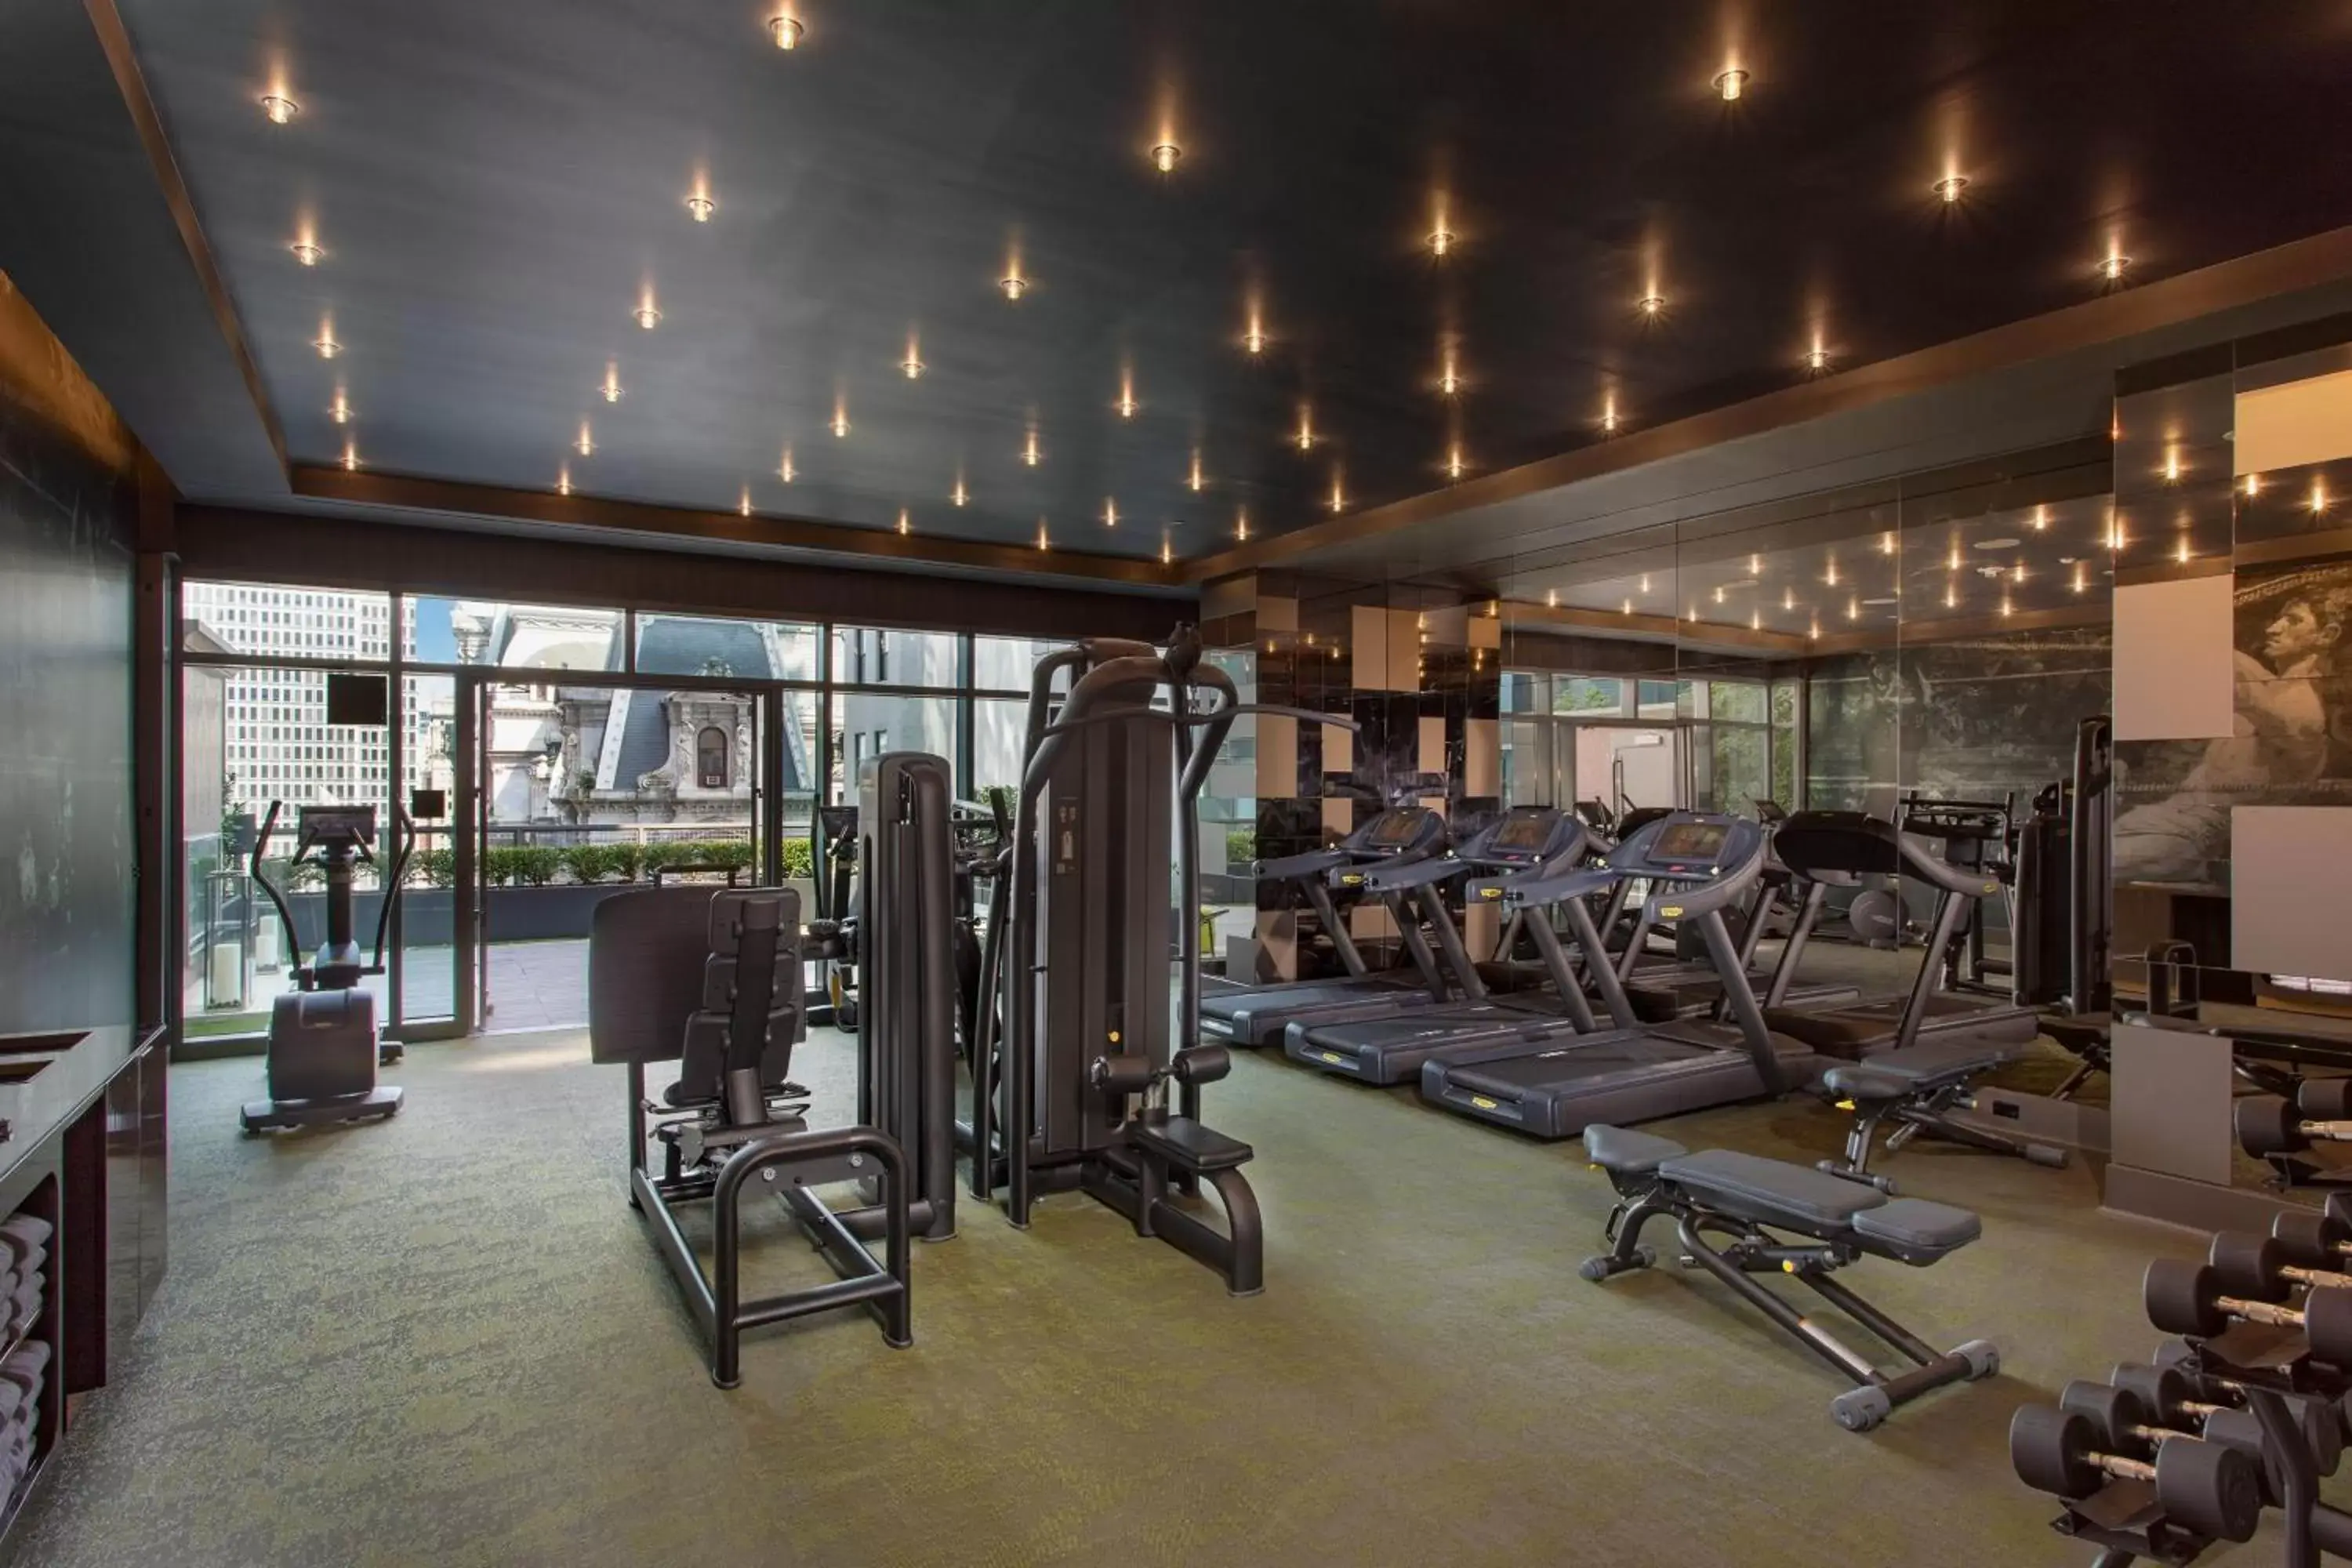 Fitness centre/facilities, Fitness Center/Facilities in W Philadelphia